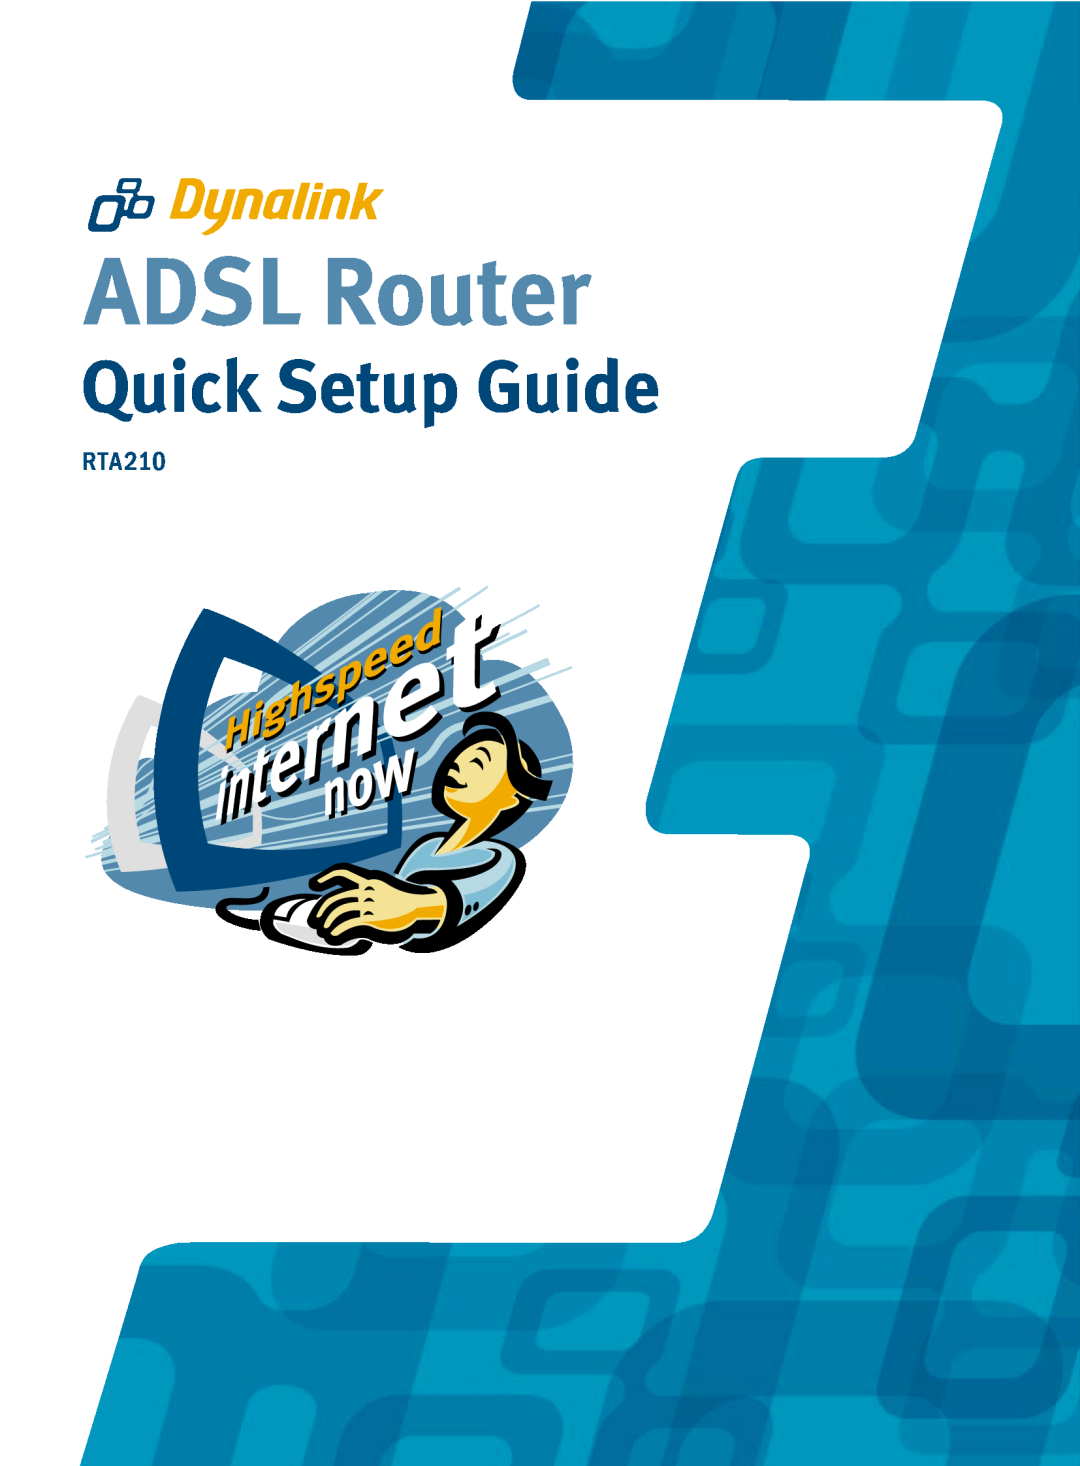 Dynalink RTA210 setup guide ADSL Router, Quick Setup Guide 